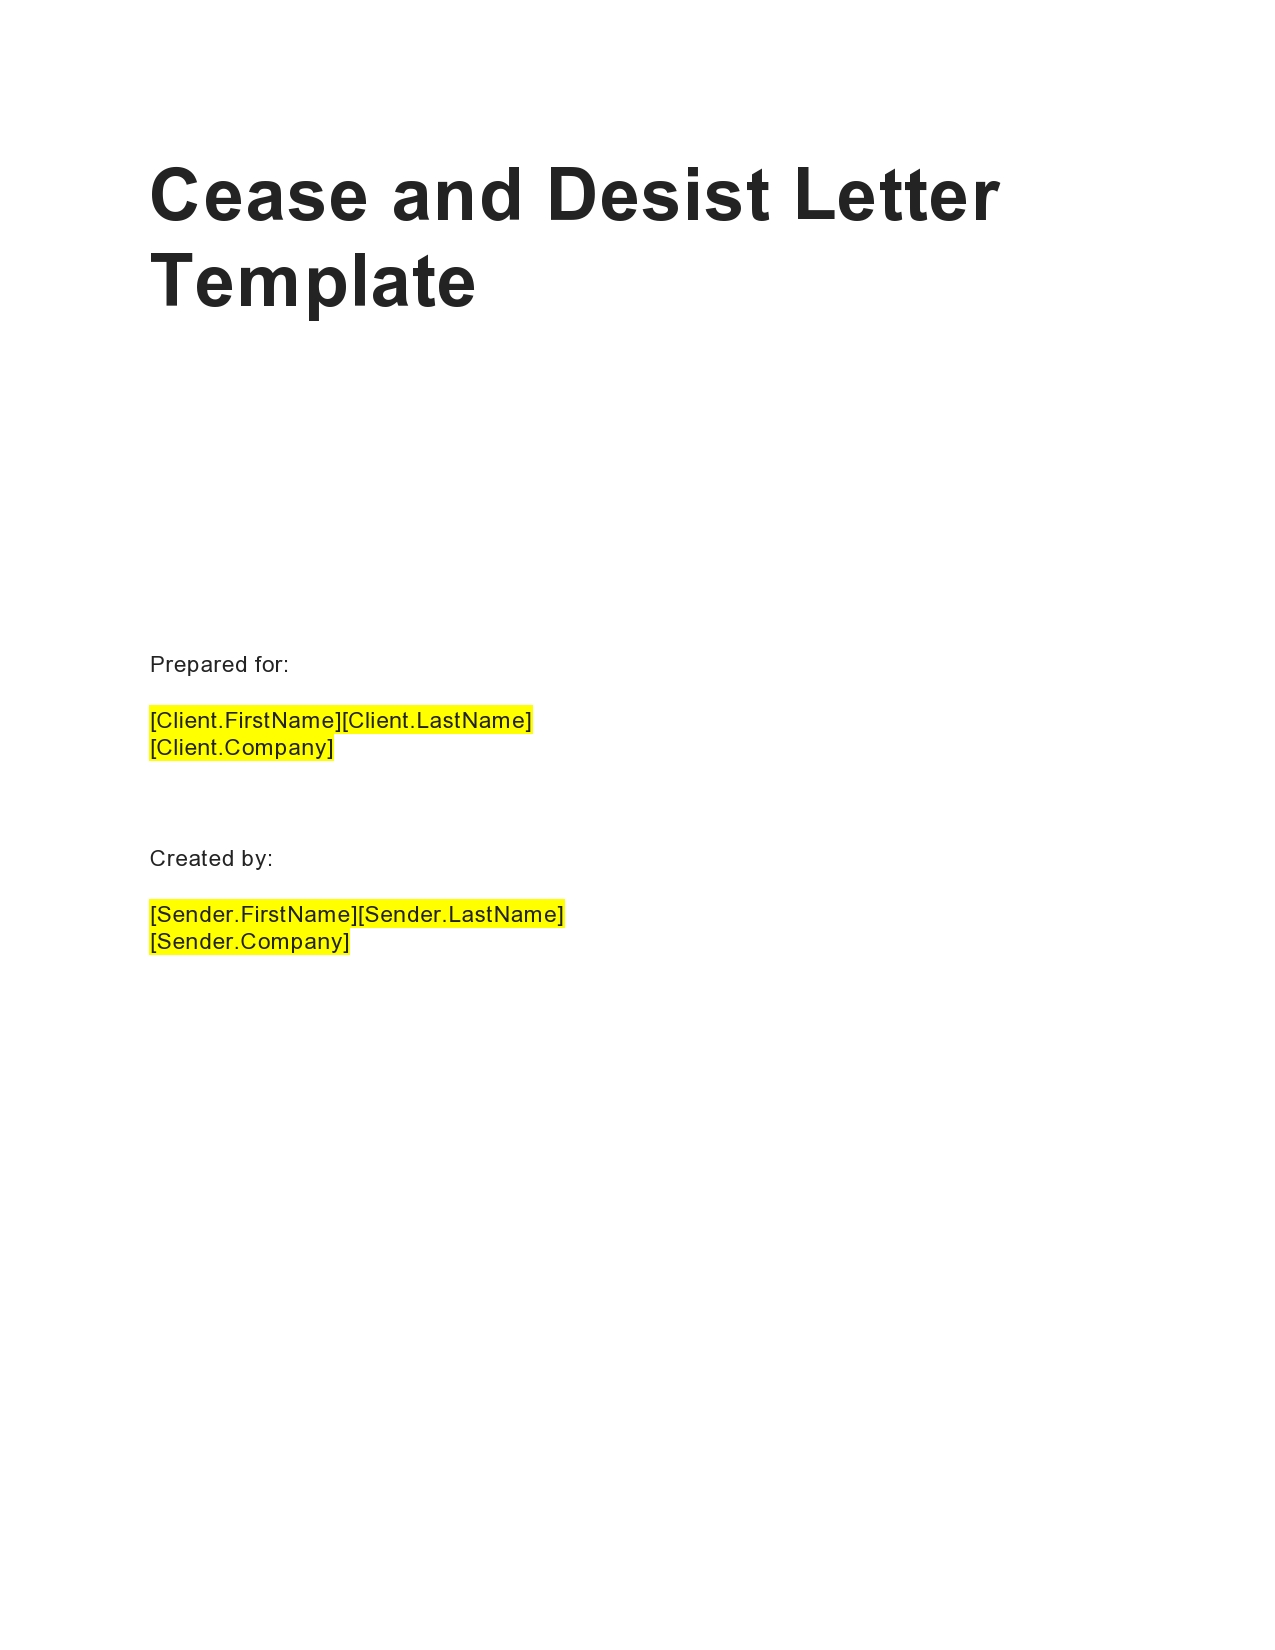 Free cease and desist defamation letter 18